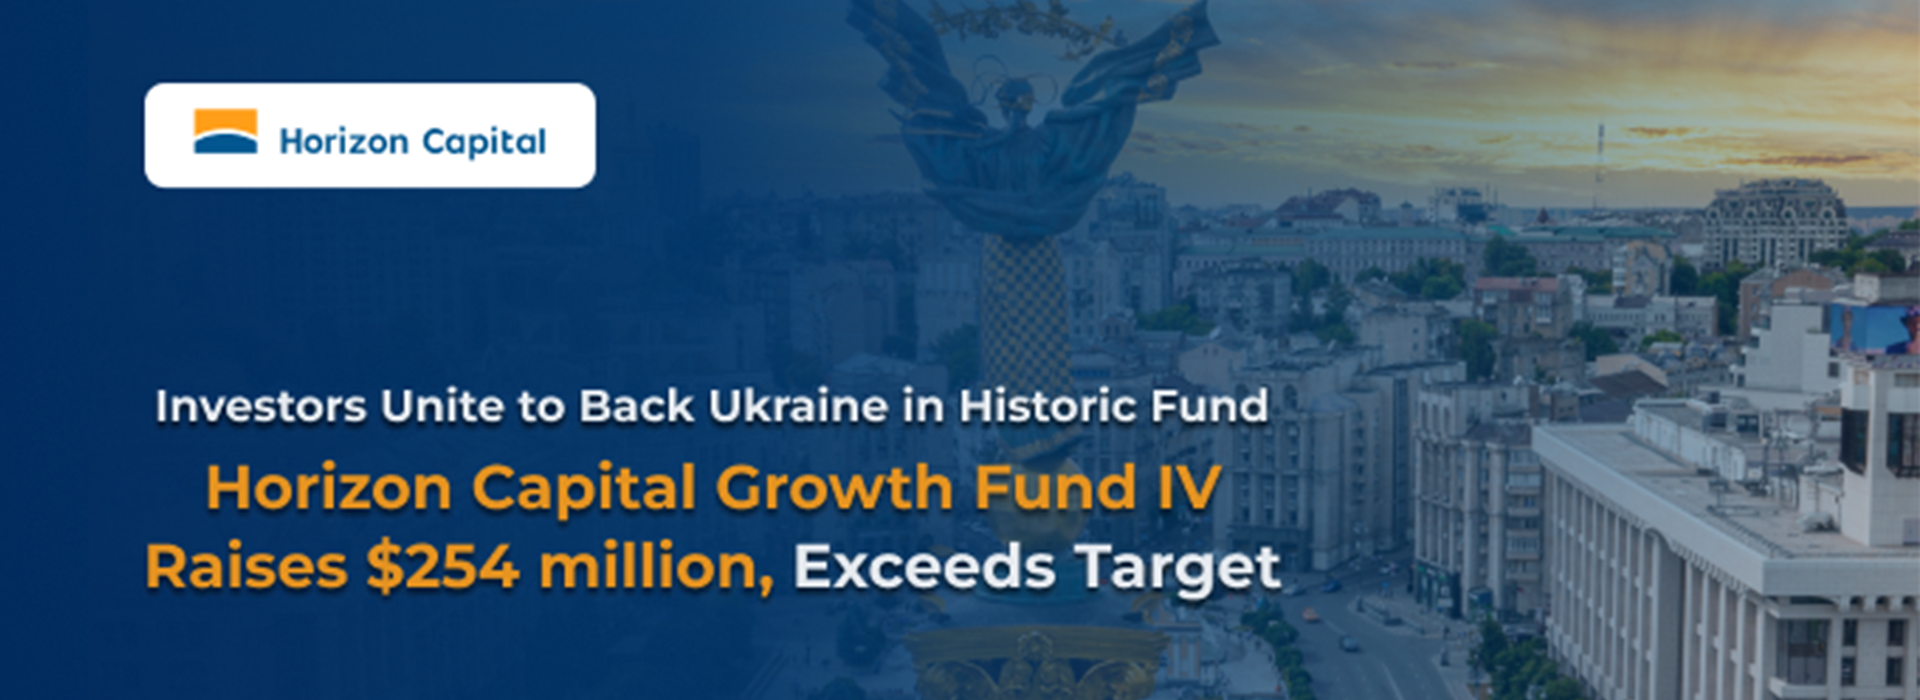 Investors Unite to Back Ukraine in Historic Fund